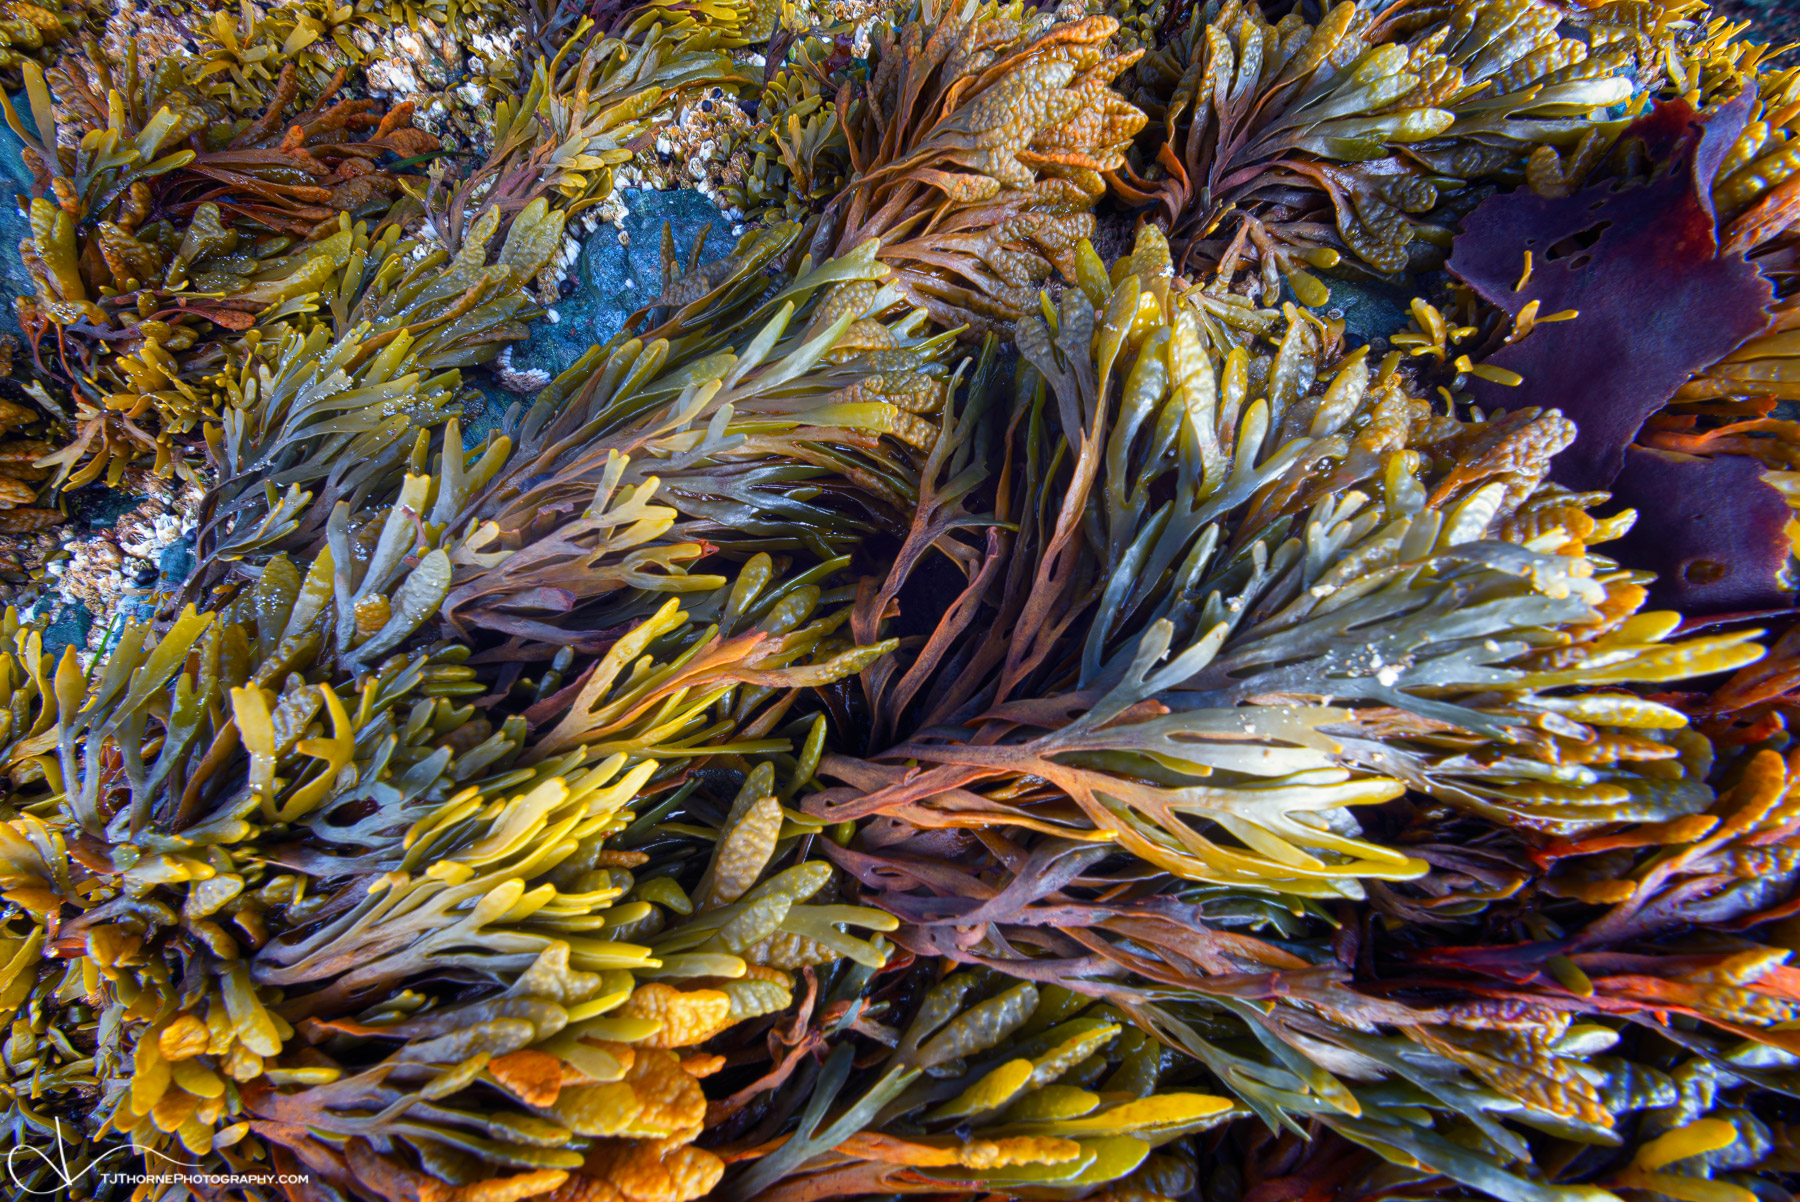 Colorful rockweed patterns photographed on the Oregon Coast.